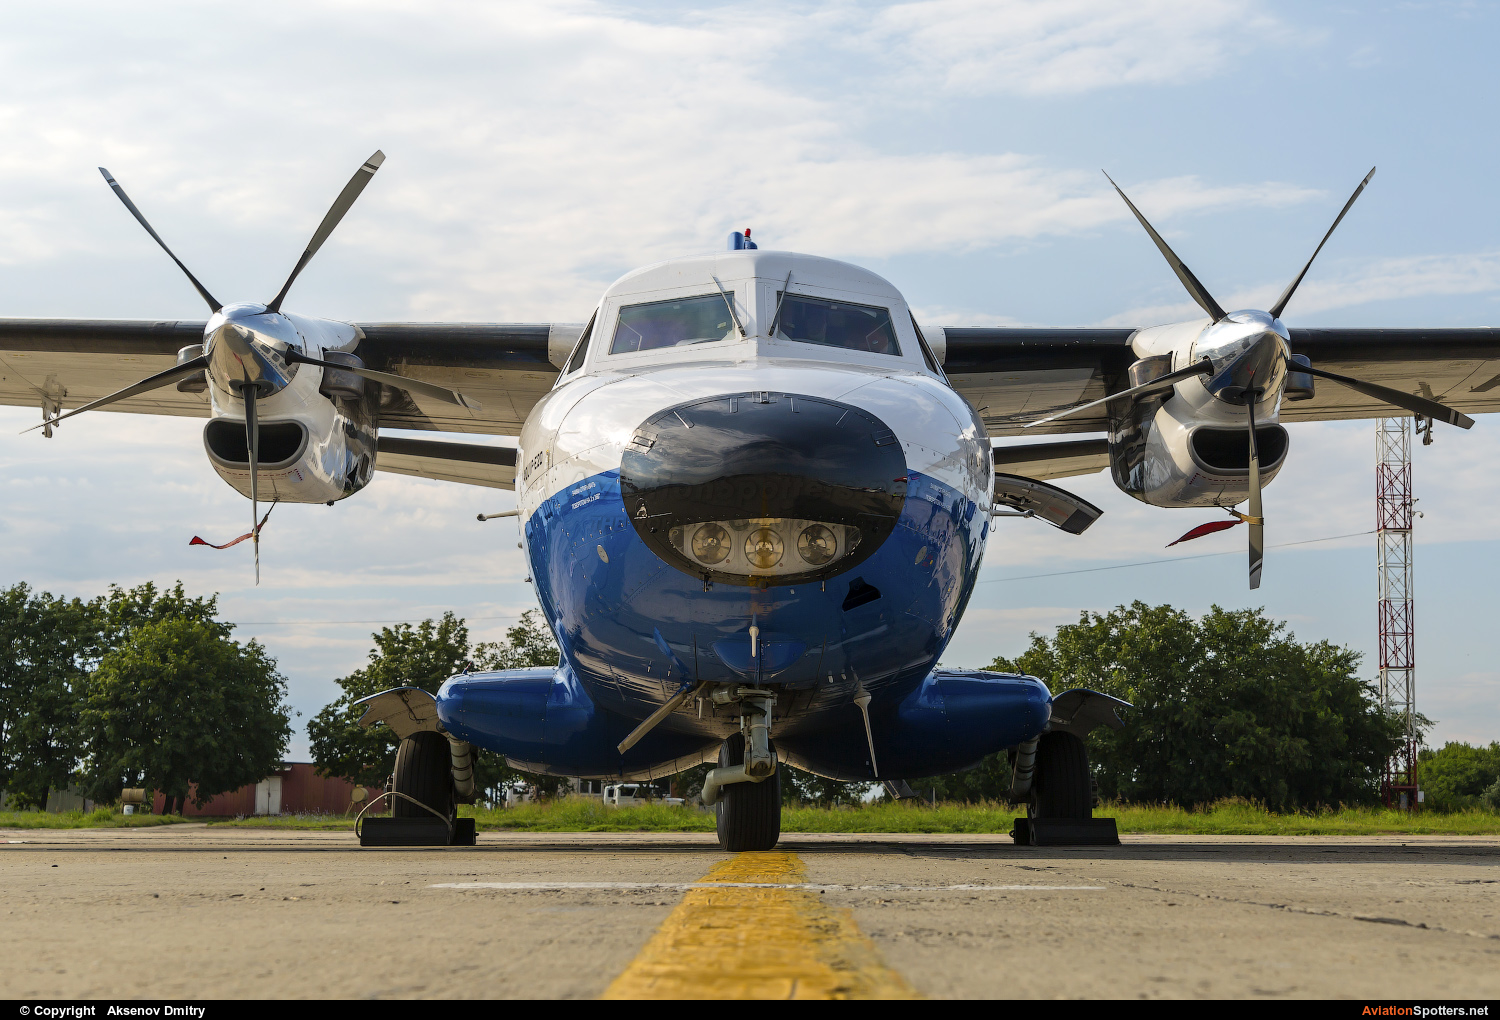   L-410UVP-E Turbolet  (RA-67044) By Aksenov Dmitry (Adimka)